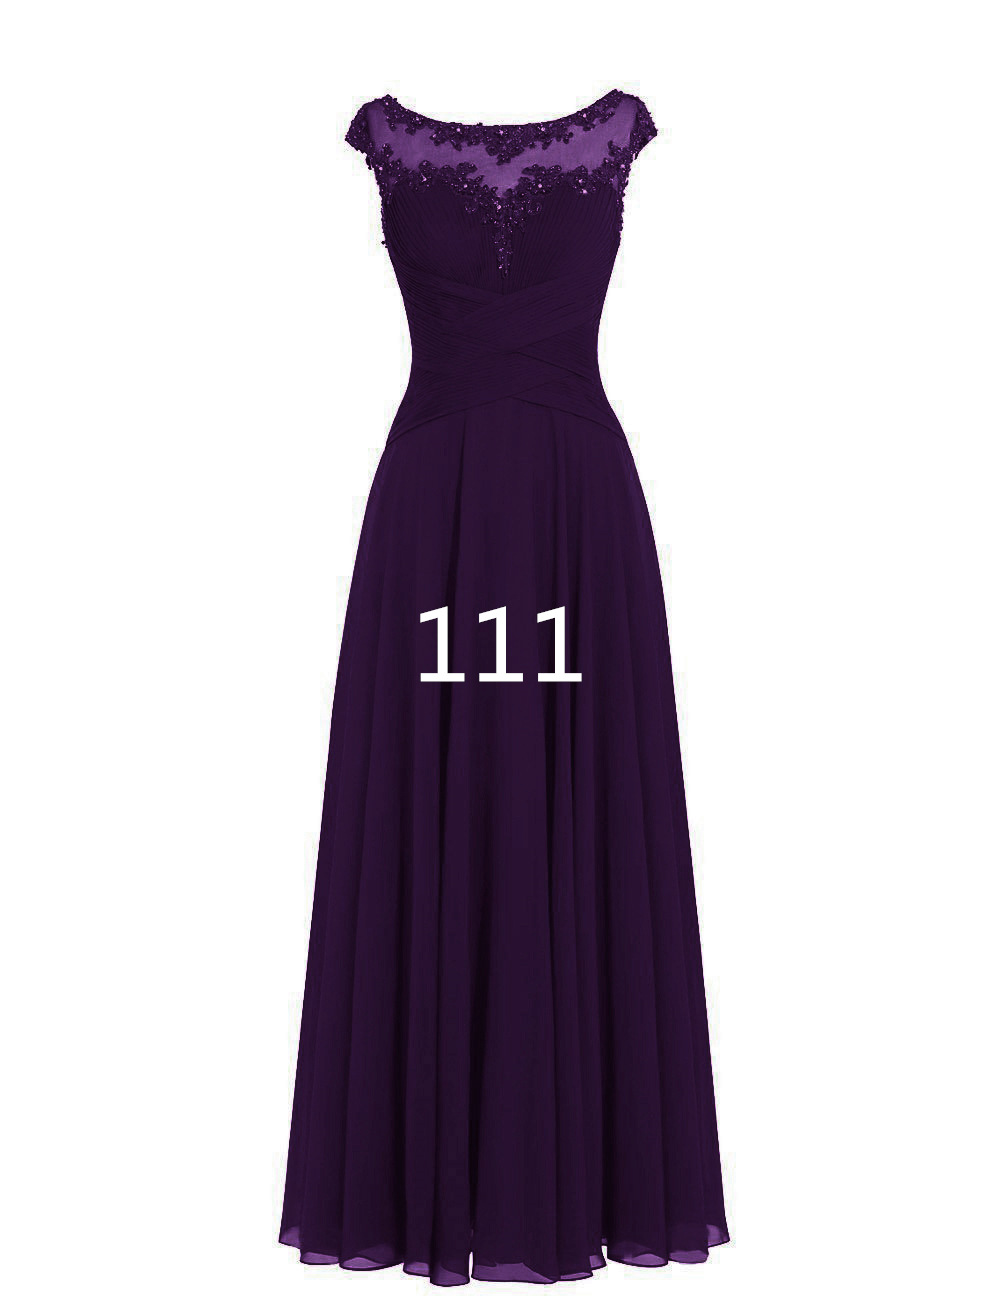 Women Sleveless Embroidered Chiffon Bridesmaid Dress Long Party Pageant Wedding Formal Dress - Dark Purple